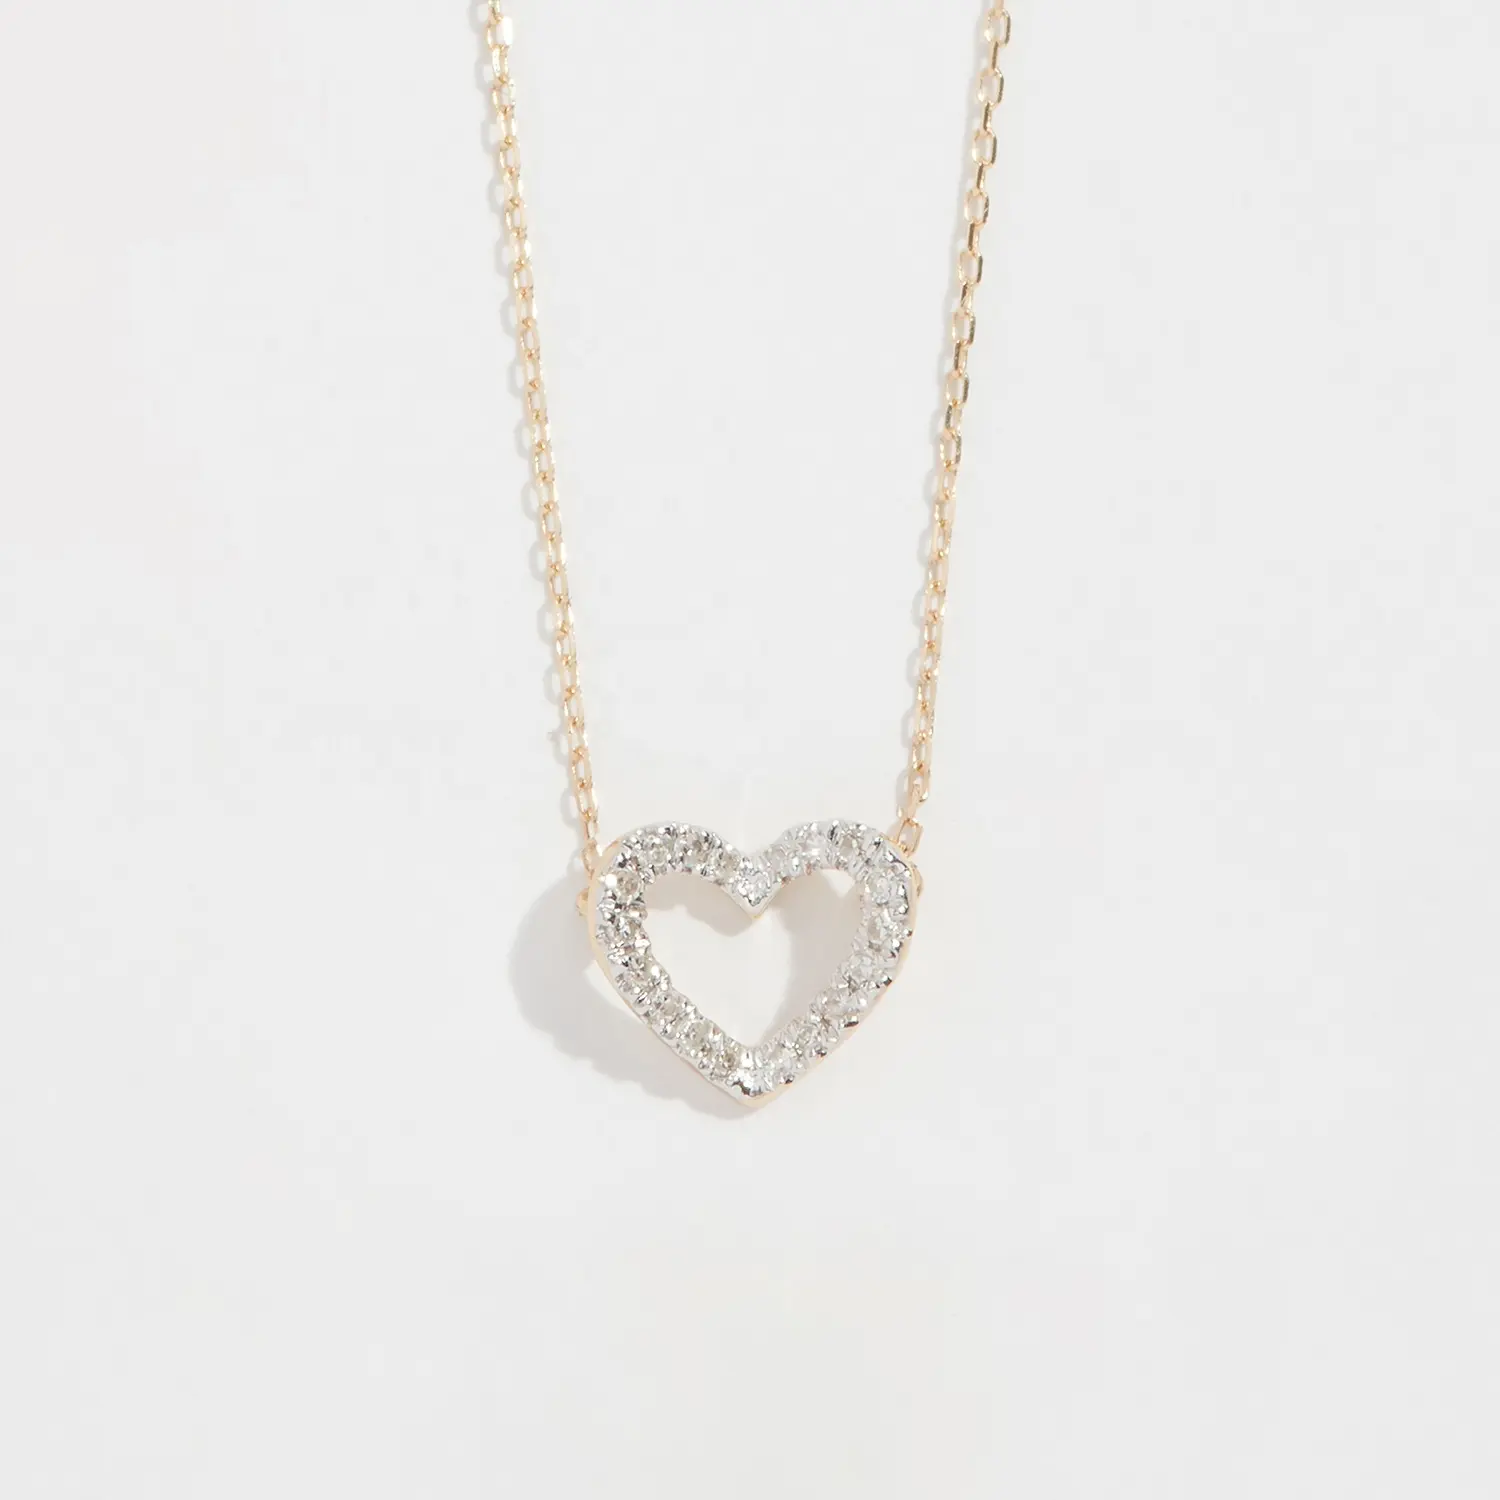 LOZRUNVE-collar de corazón abierto, joyería, plata 925, pavé de diamante CZ